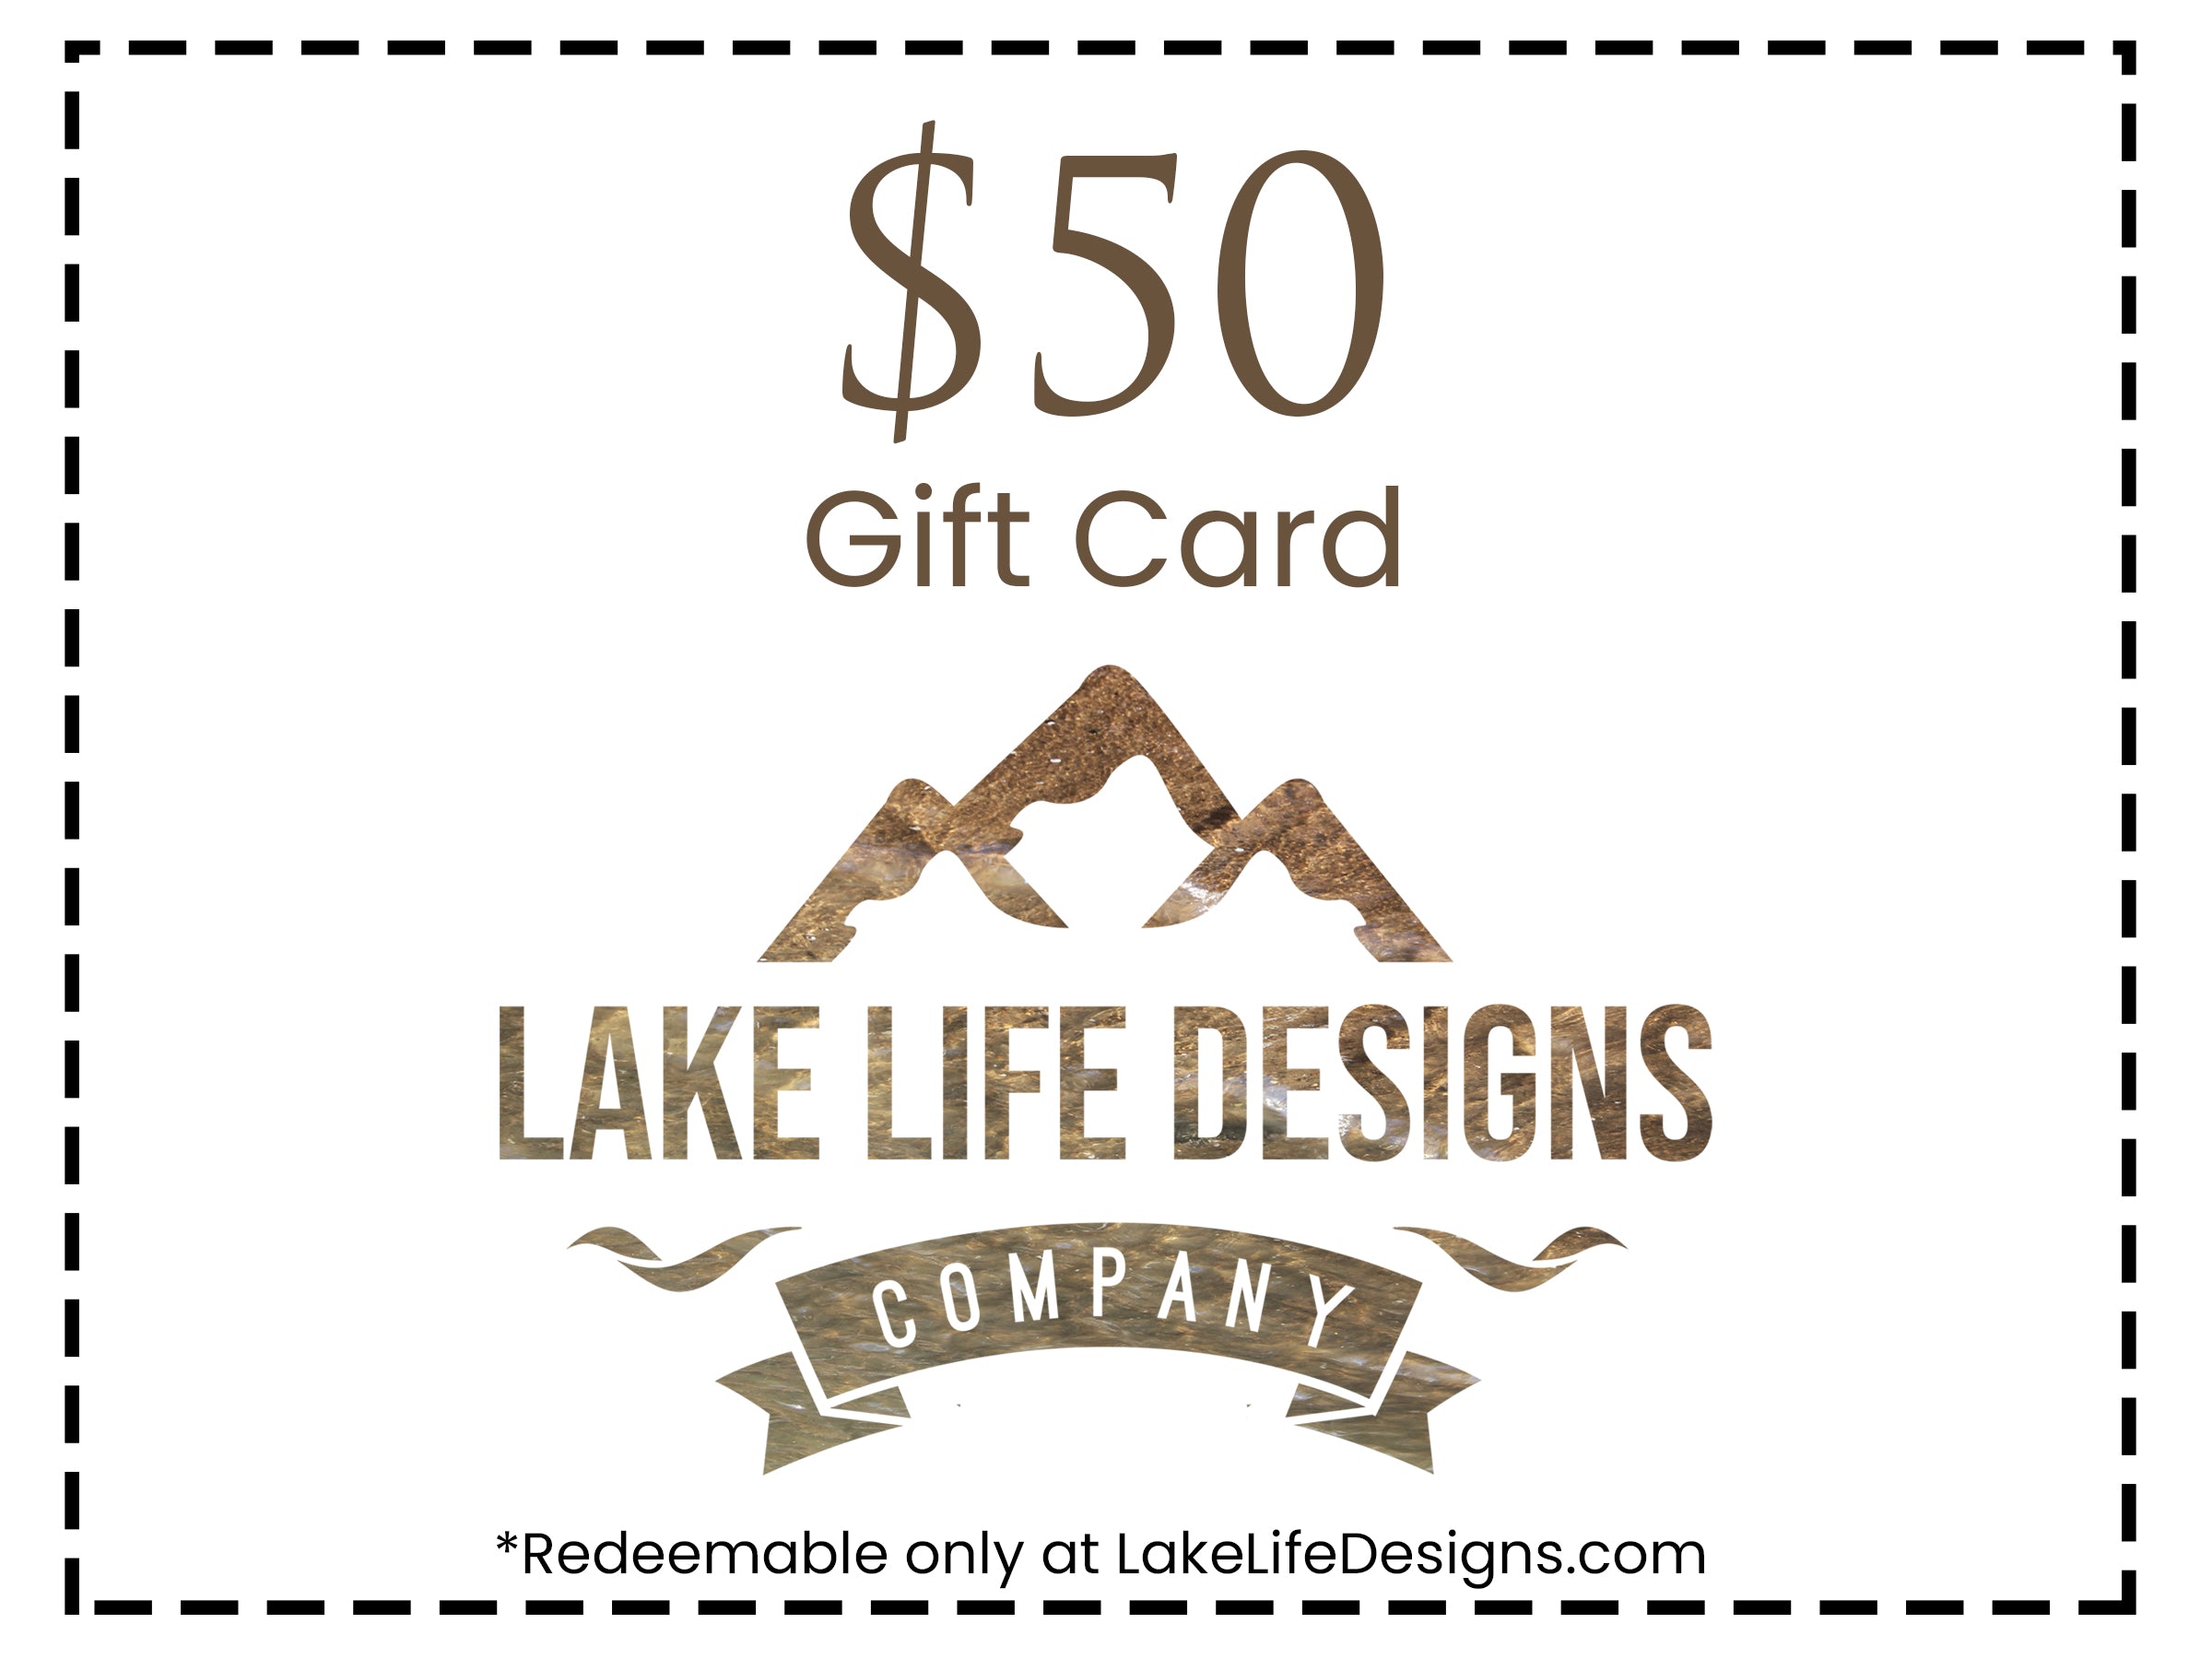 Lake Life Designs Gift Card!